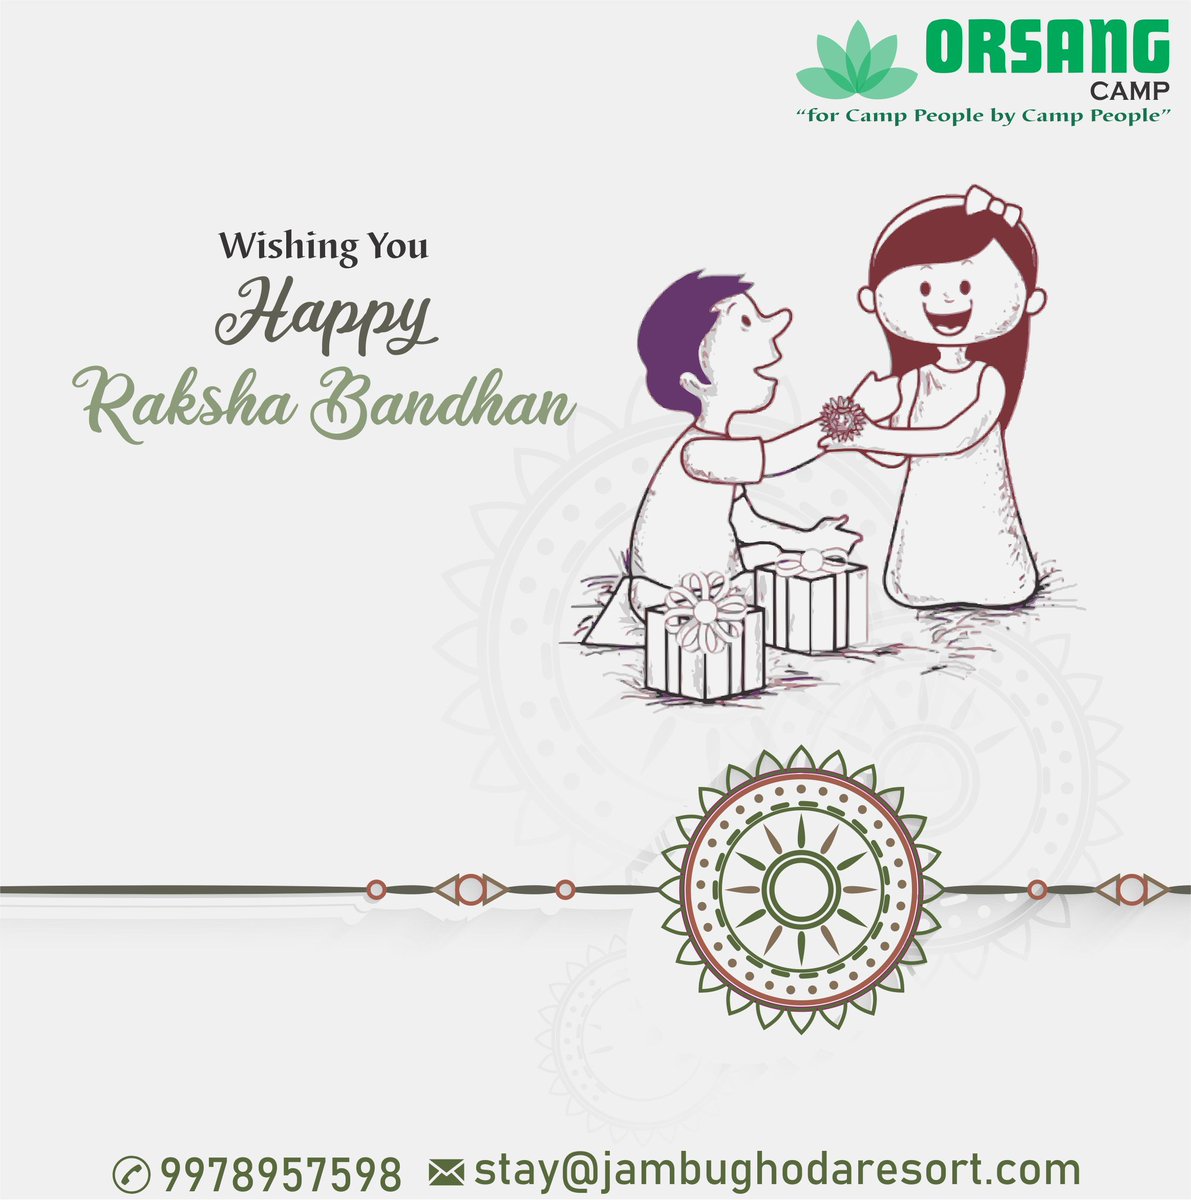 Celebrating the sacred bond of trust and togetherness.
Happy Raksha Bandhan From Orsang Camp.

Website: buff.ly/2VwzOhY | Mobile: +91 9978957597 

#TheOrsangResort #OrsangResort #Rakshabandhan #Celebration #Love #Family #Enjoy #Celebration #OrsangGroup